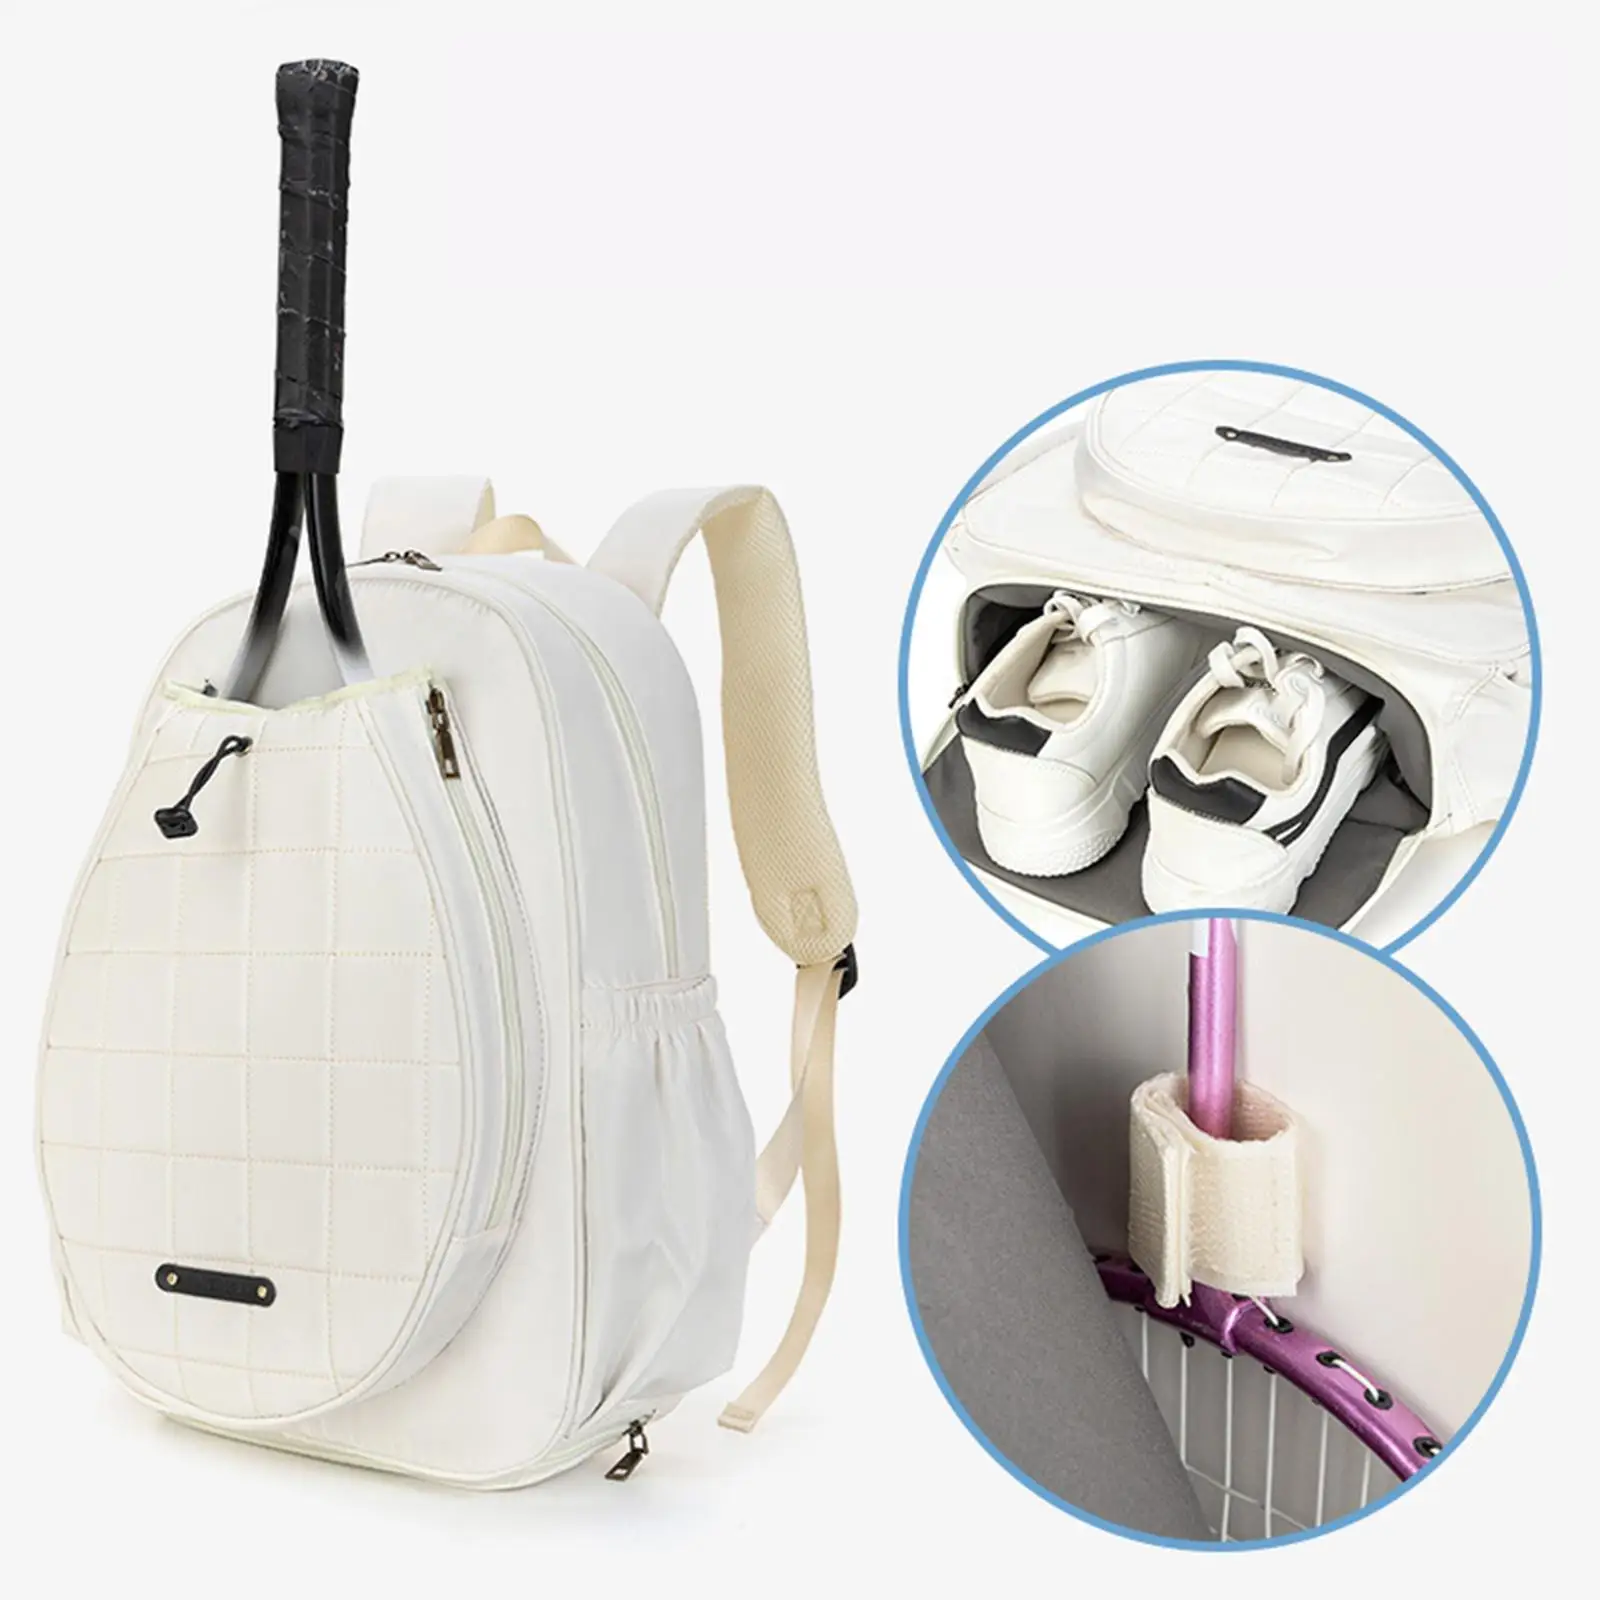 Tennis Backpack Tennis Bag Large Racket Bag Racket Holder Racquet Cover for Tennis Racket Balls Accessories Pickleball Paddles